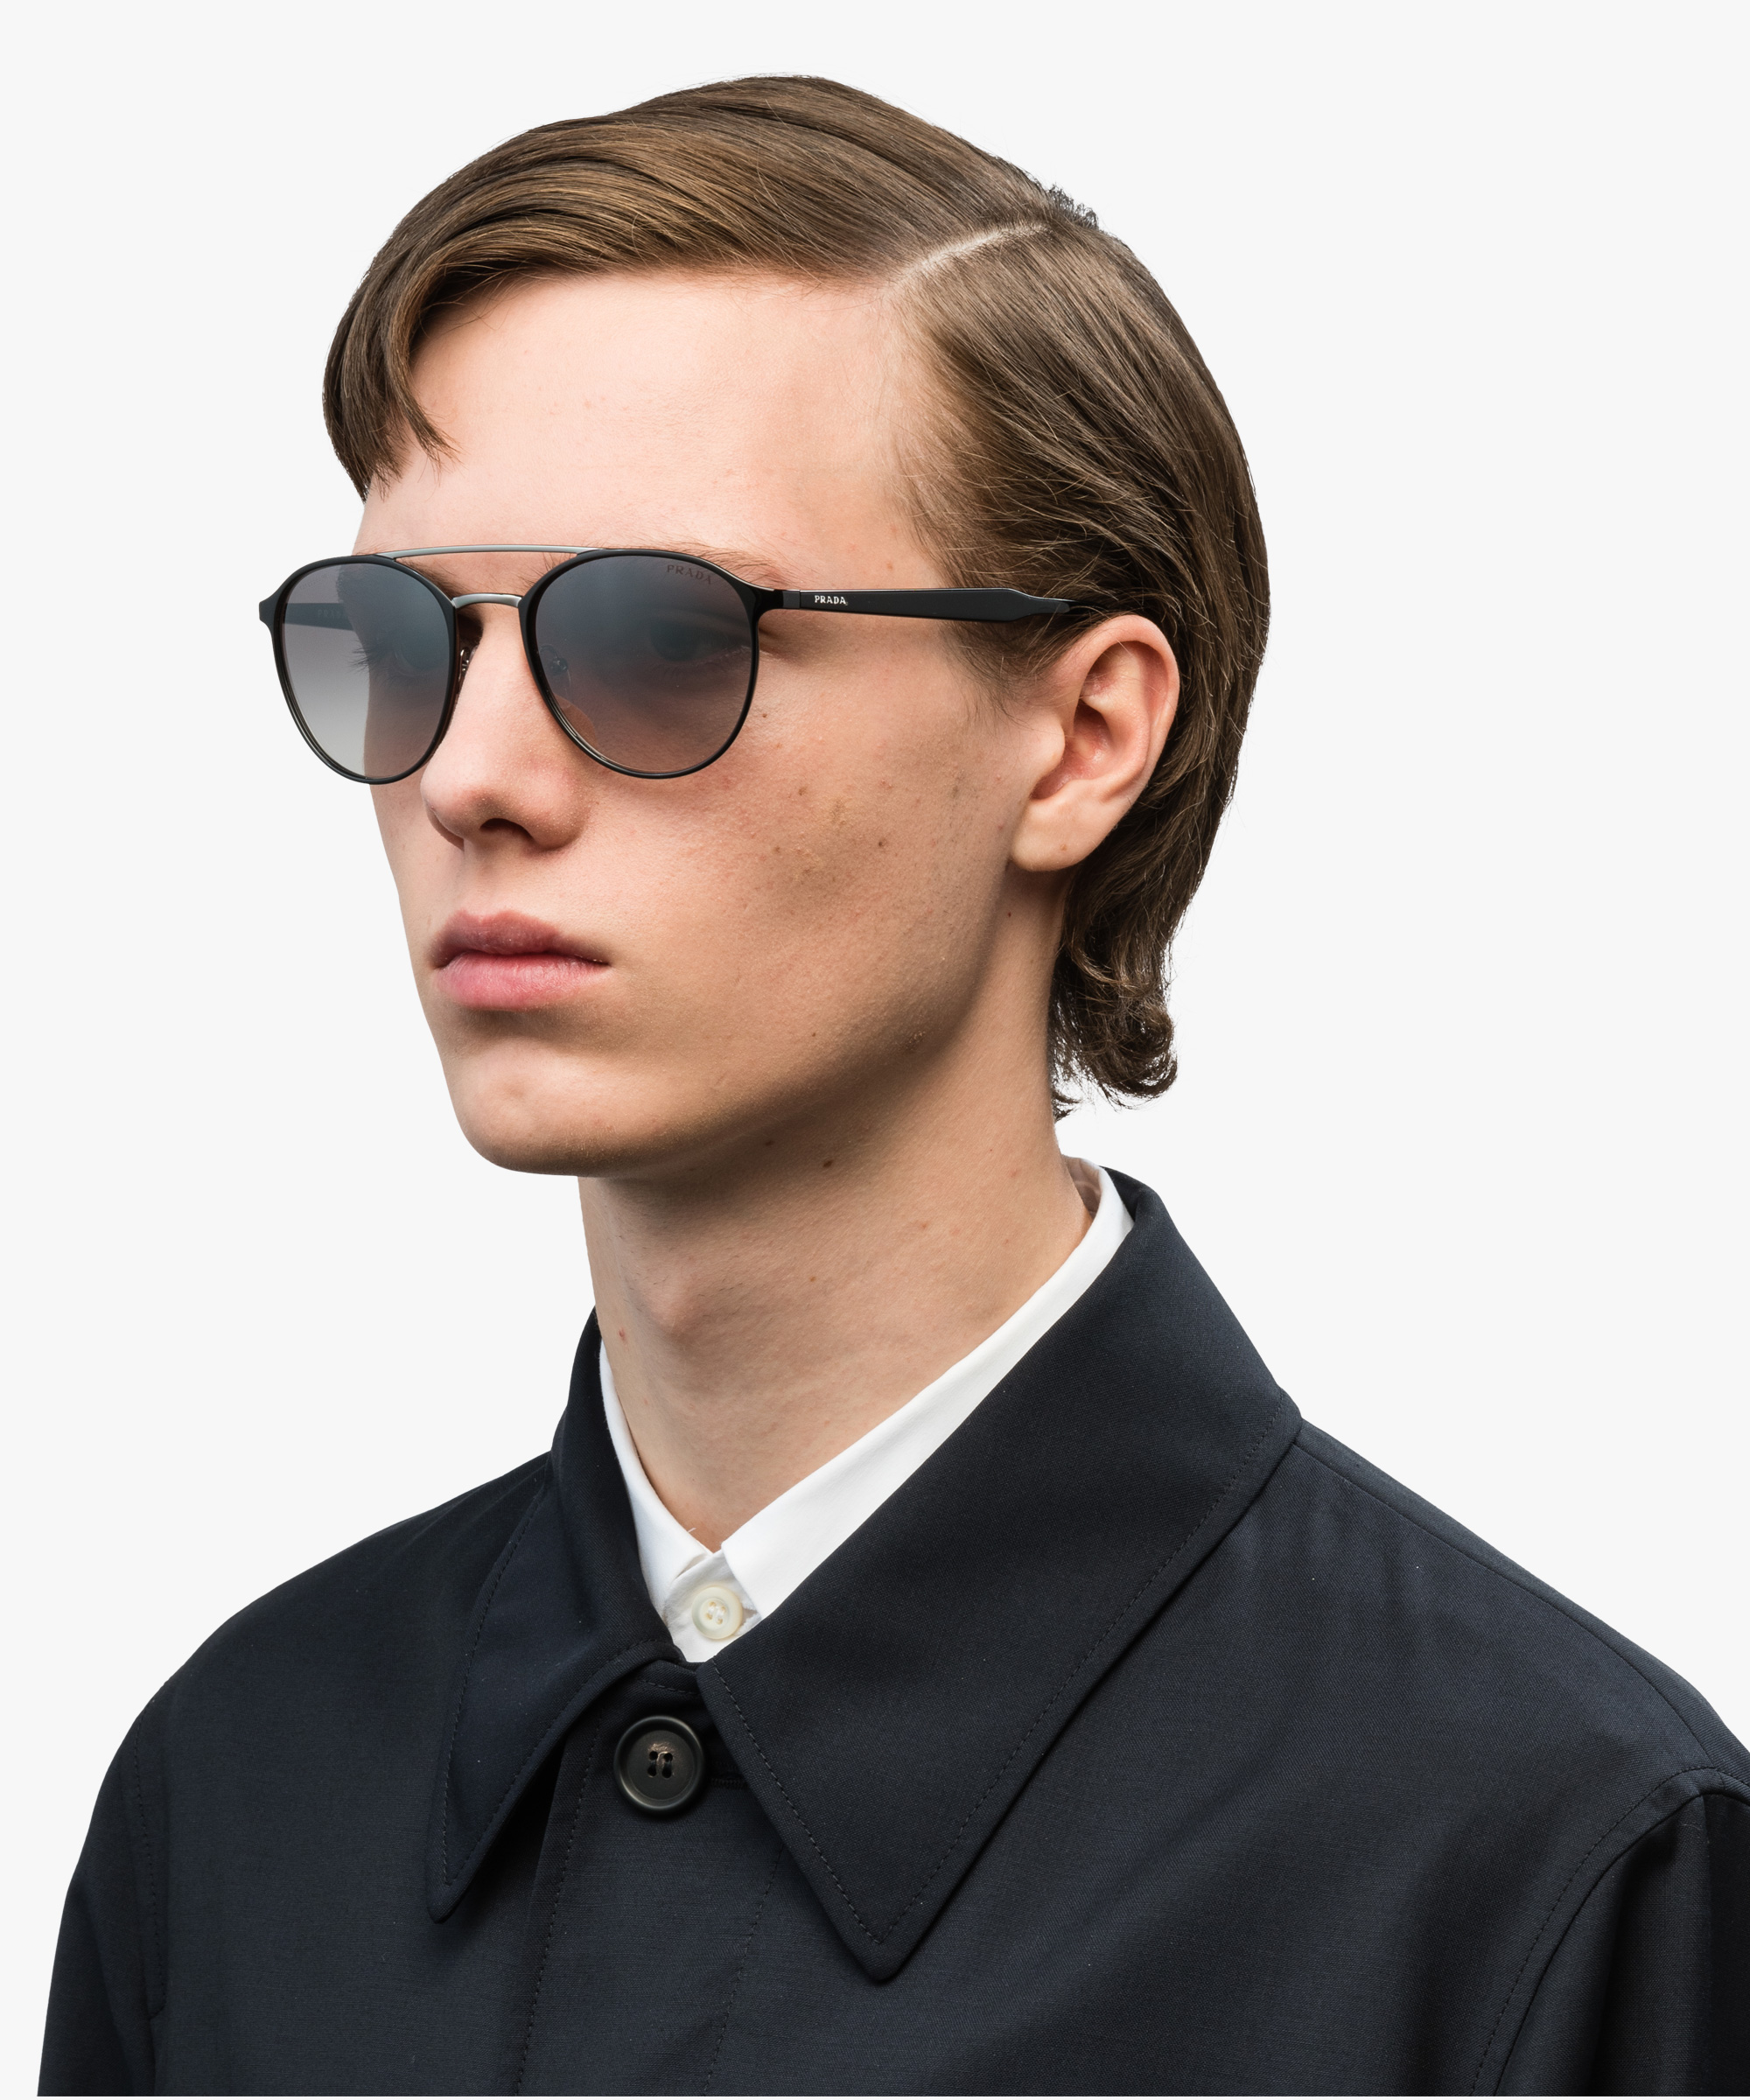 Prada Eyewear Collection sunglasses | Prada